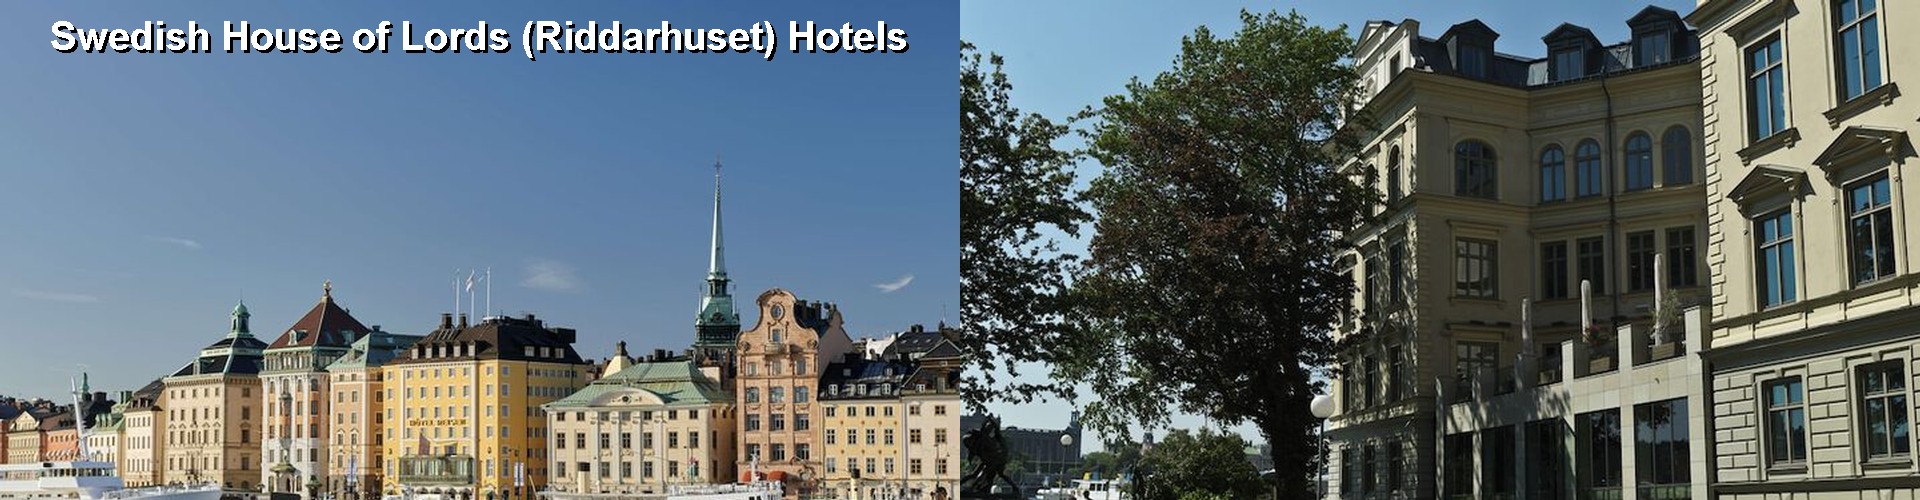 5 Best Hotels near Swedish House of Lords (Riddarhuset)